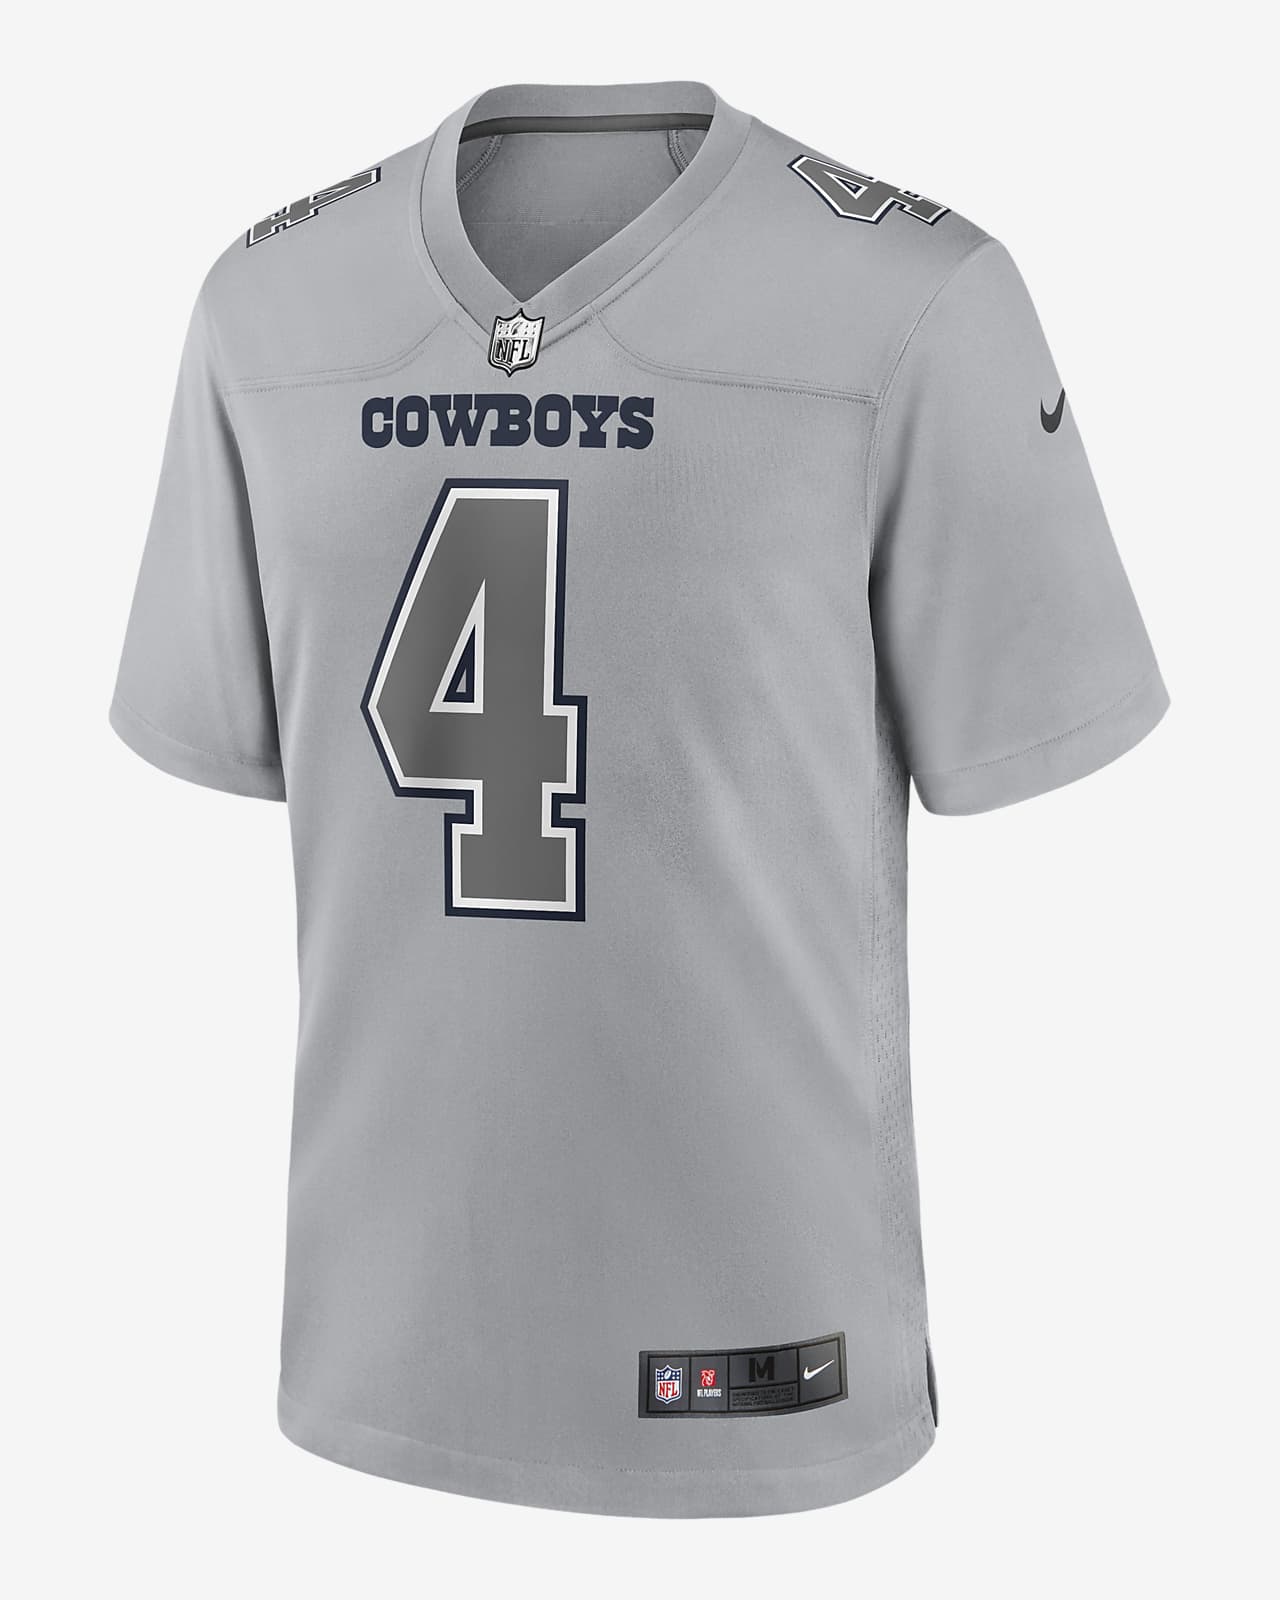 NFL Dallas Cowboys Atmosphere (Dak Prescott) Men's Fashion Football Jersey